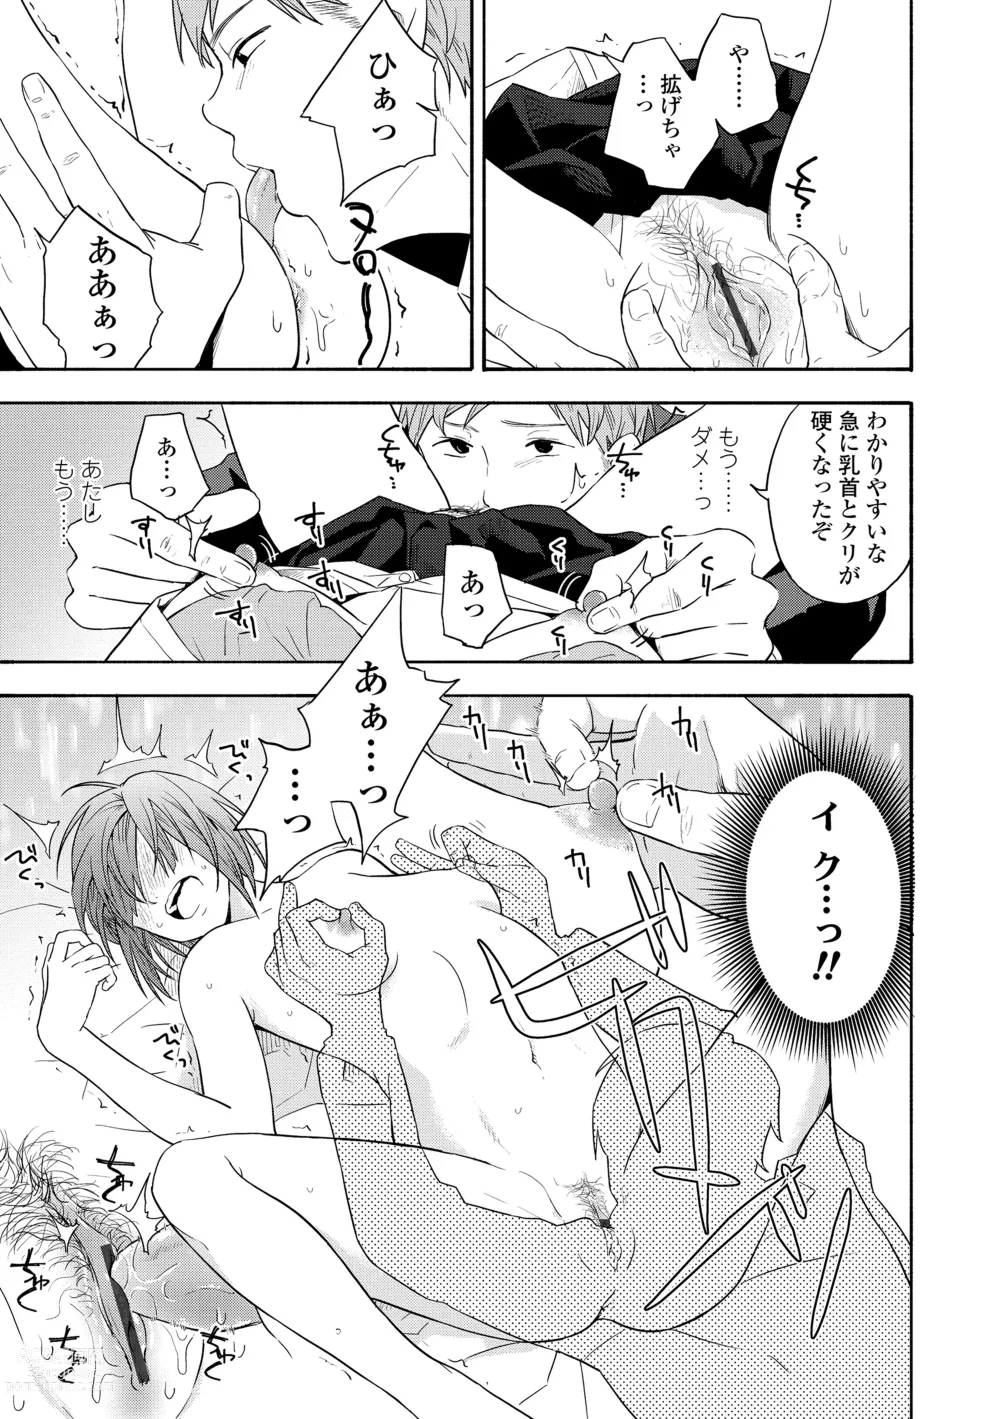 Page 15 of manga Shishunki no Eros - puberty eros + DLsite Kounyu Tokuten